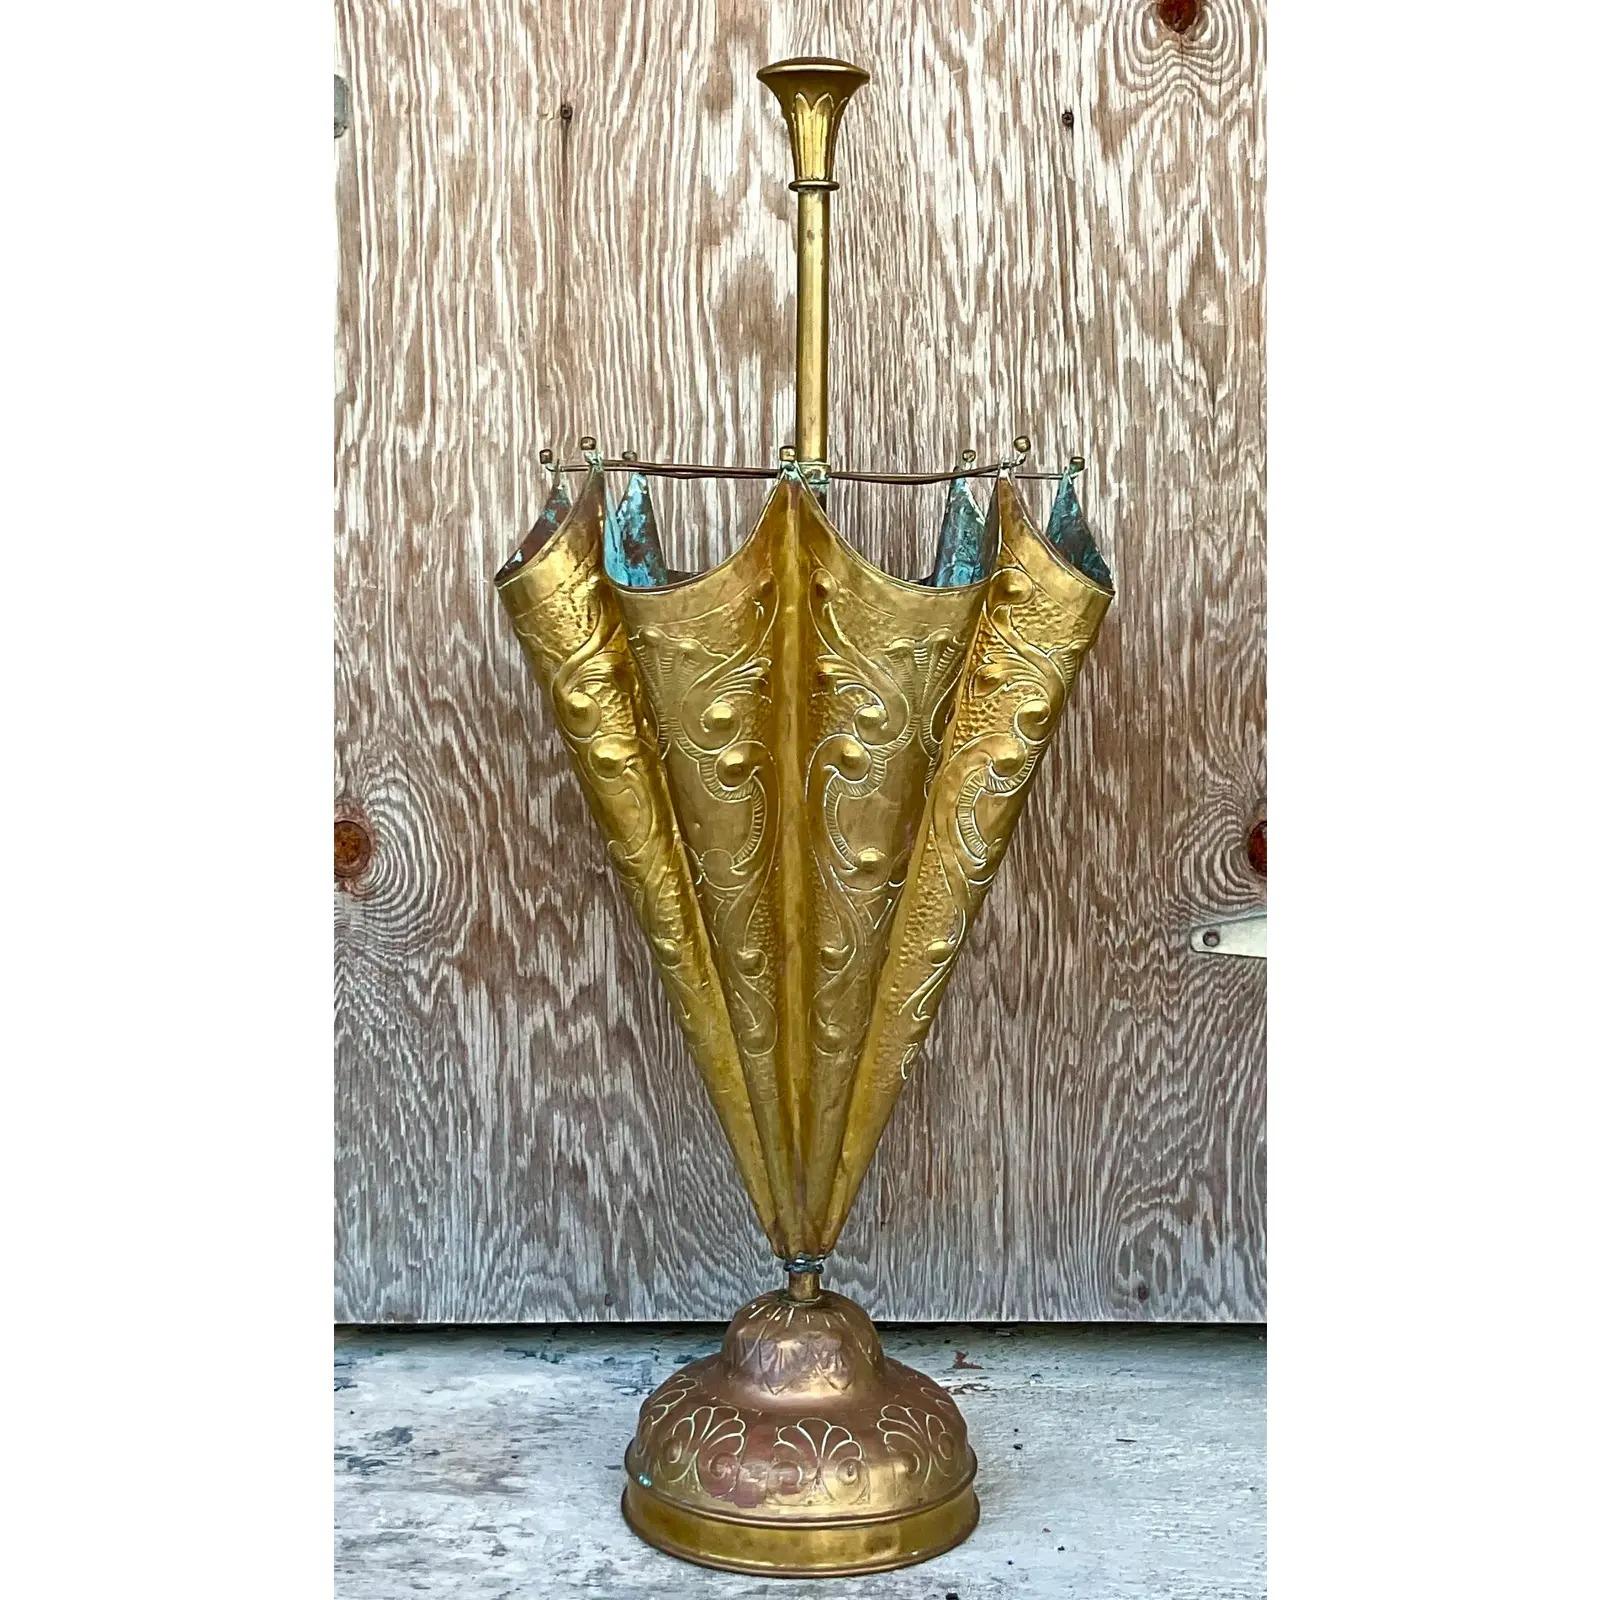 North American Vintage Regency Hammered Brass Umbrella Stand For Sale